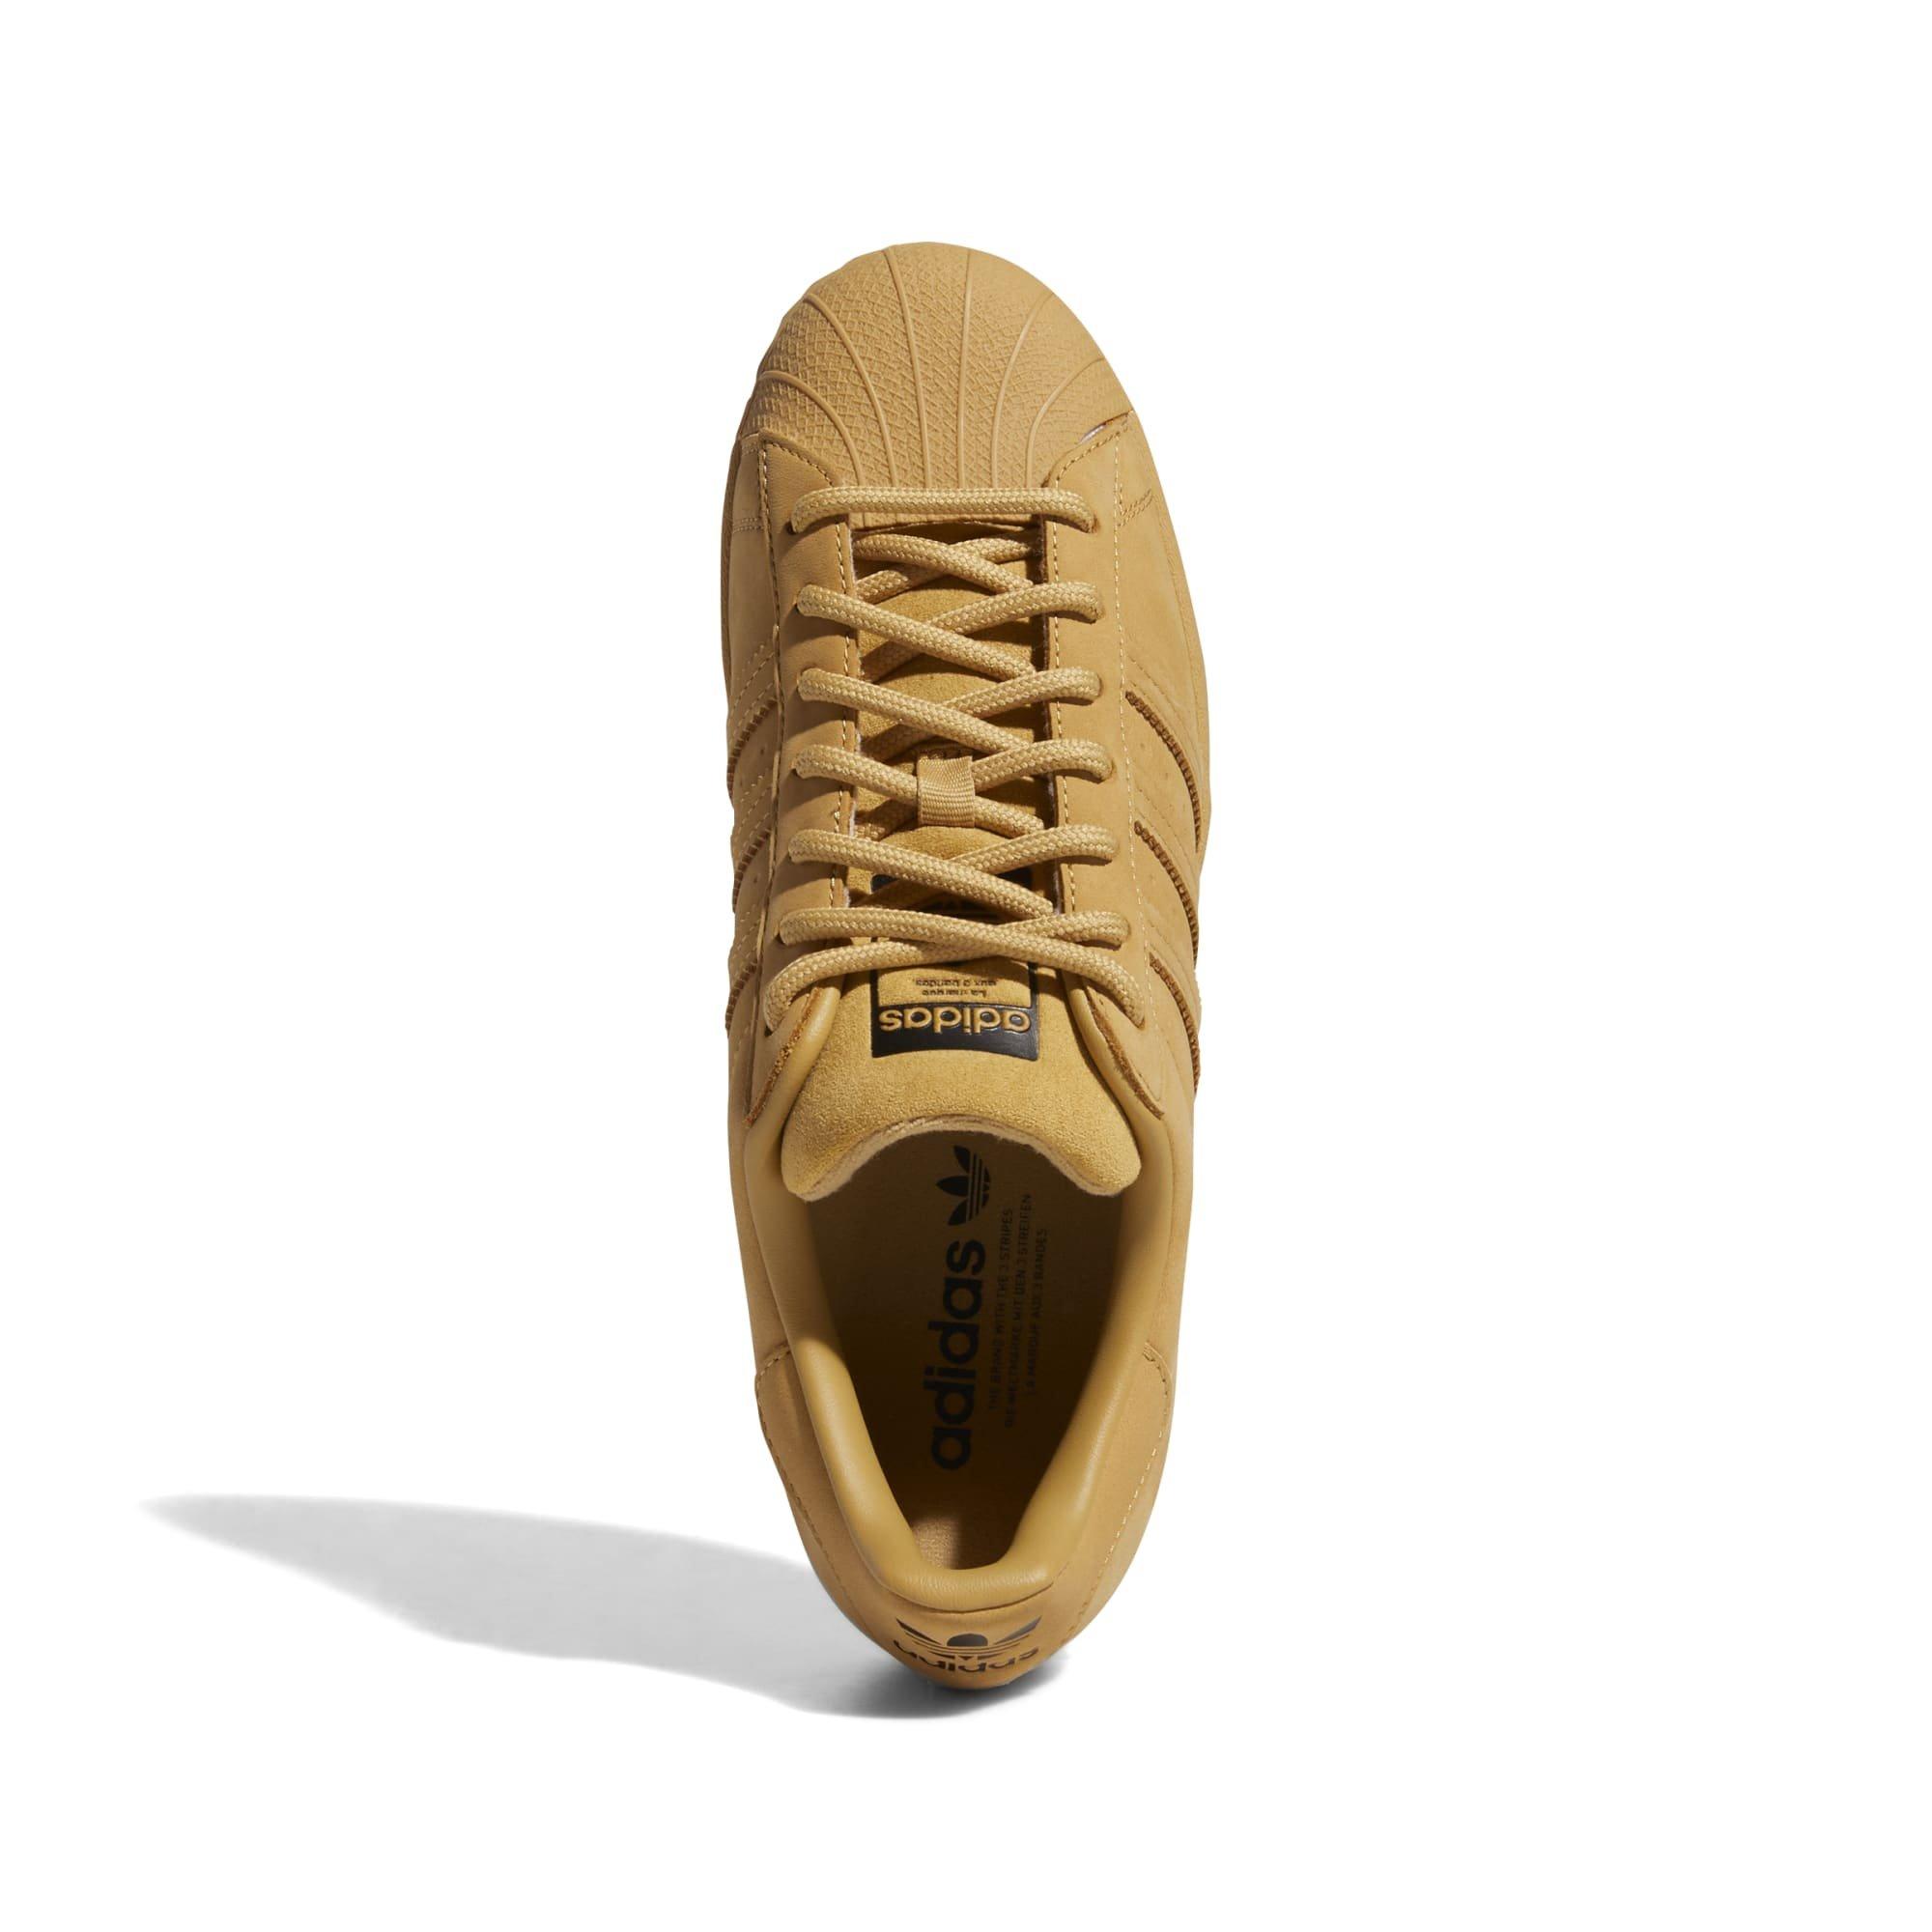 adidas Superstar Core Black/Gold/Pulse Blue Men's Shoe - Hibbett